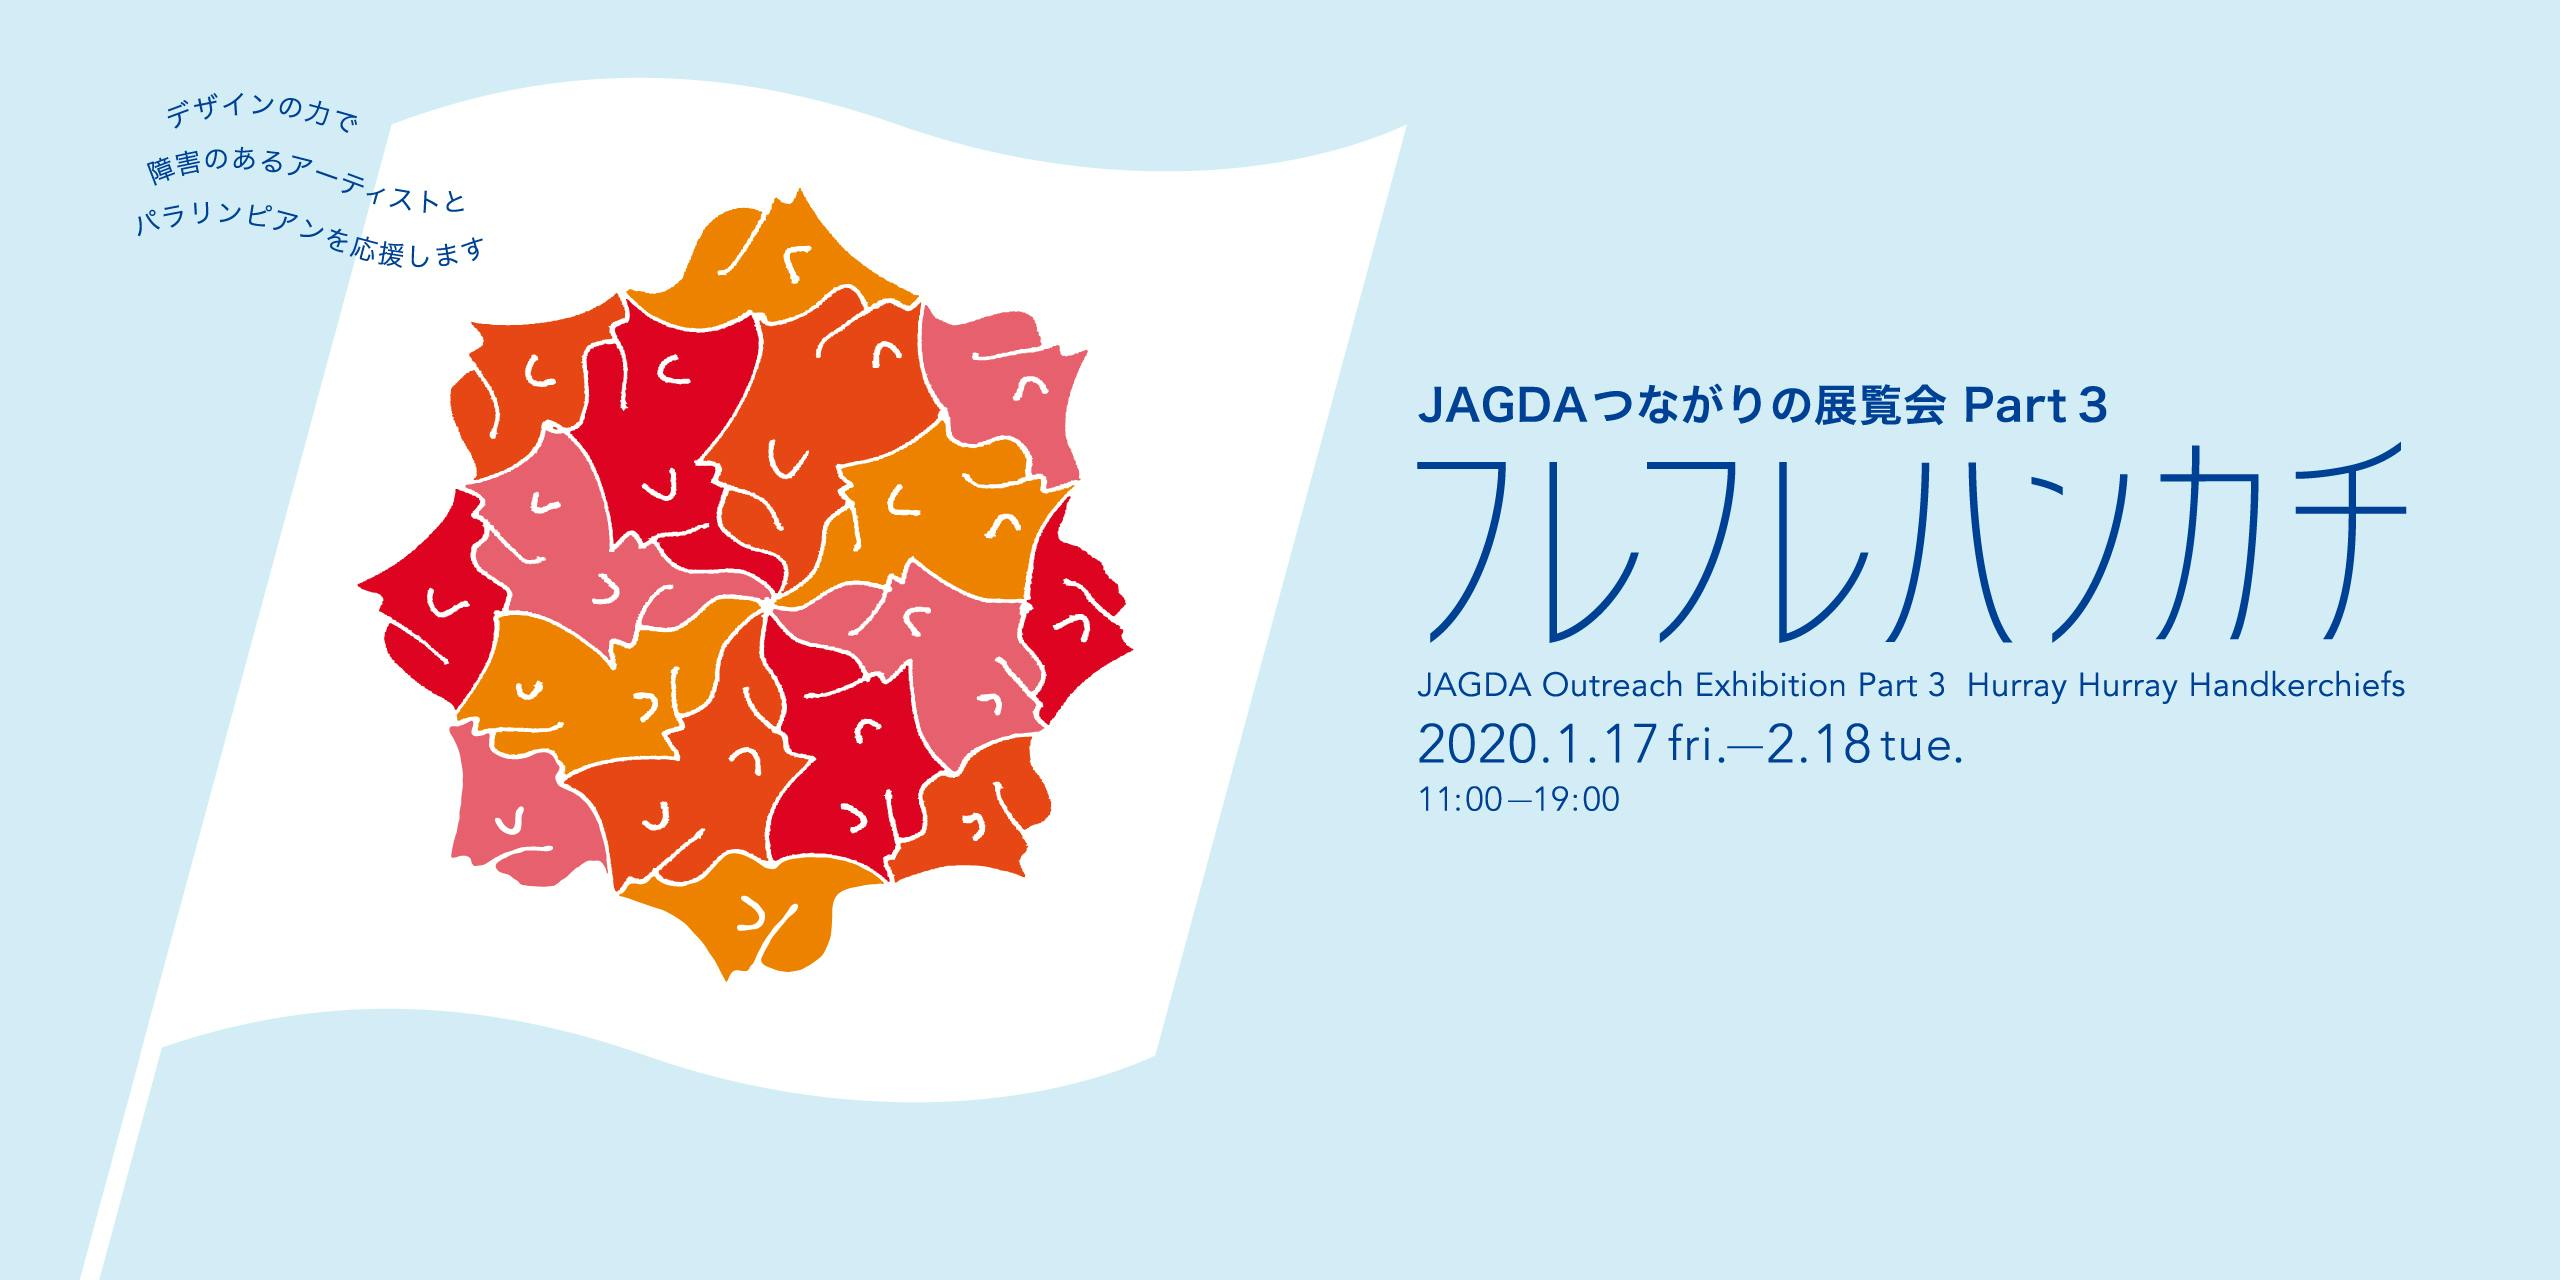 JAGDA Outreach Exhibition Part 3  Hurray Hurray Handkerchiefs